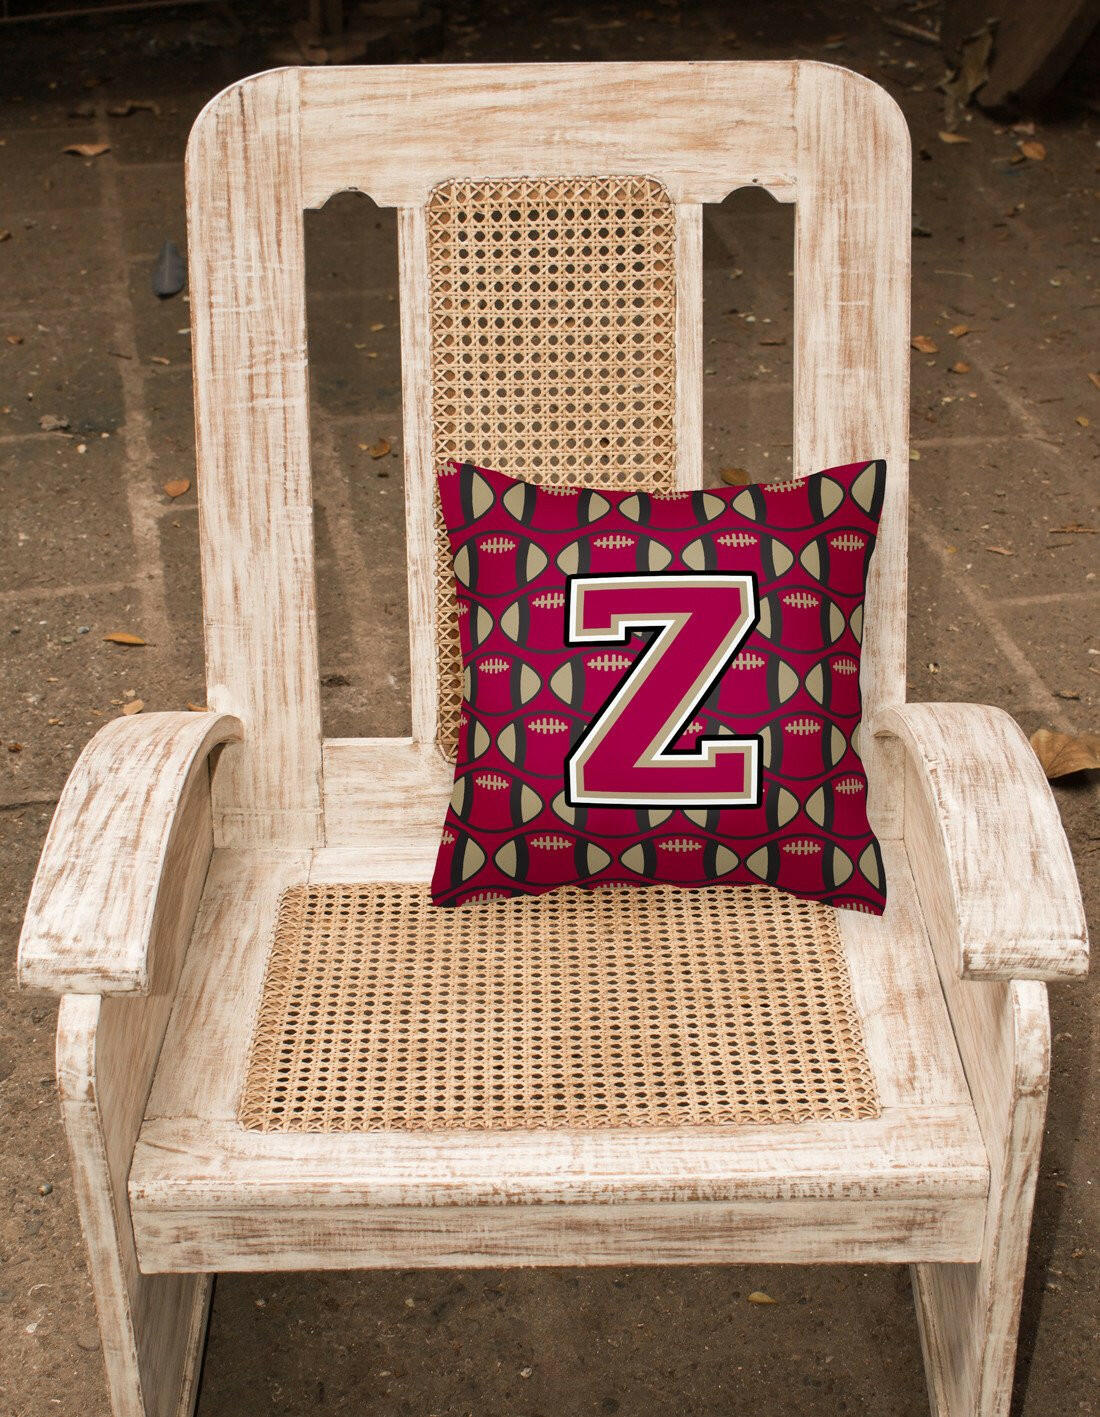 Letter Z Football Garnet and Gold Fabric Decorative Pillow CJ1078-ZPW1414 by Caroline's Treasures